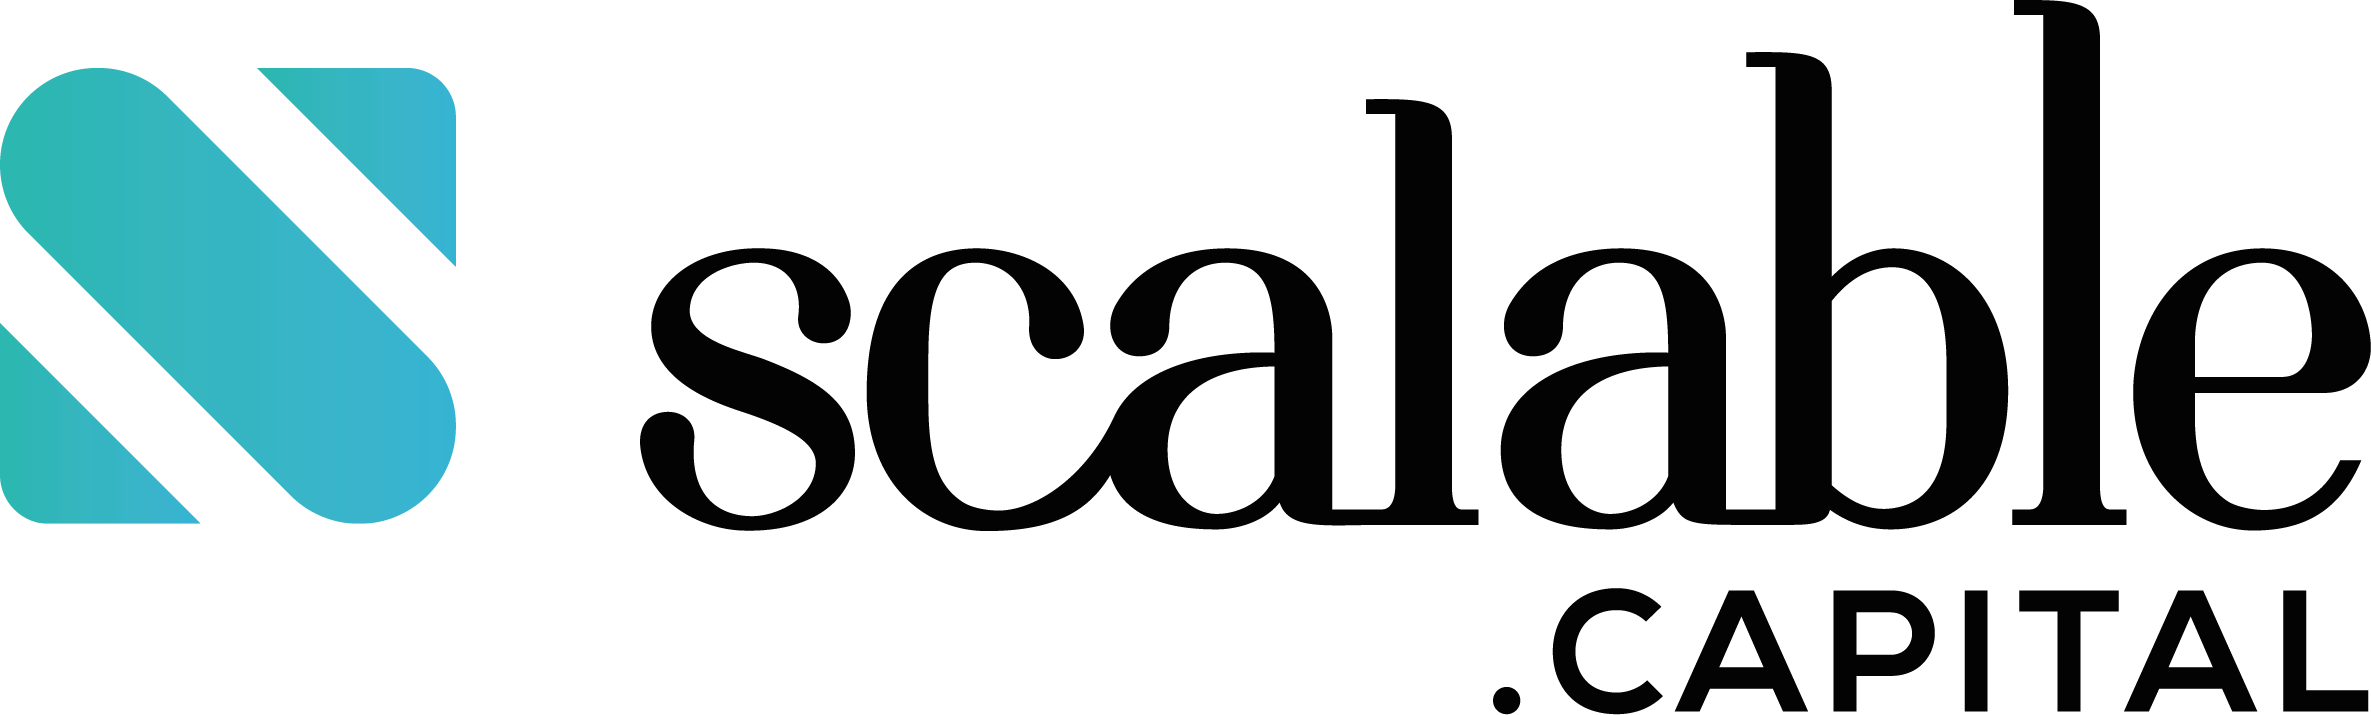 Scalable Capital logo